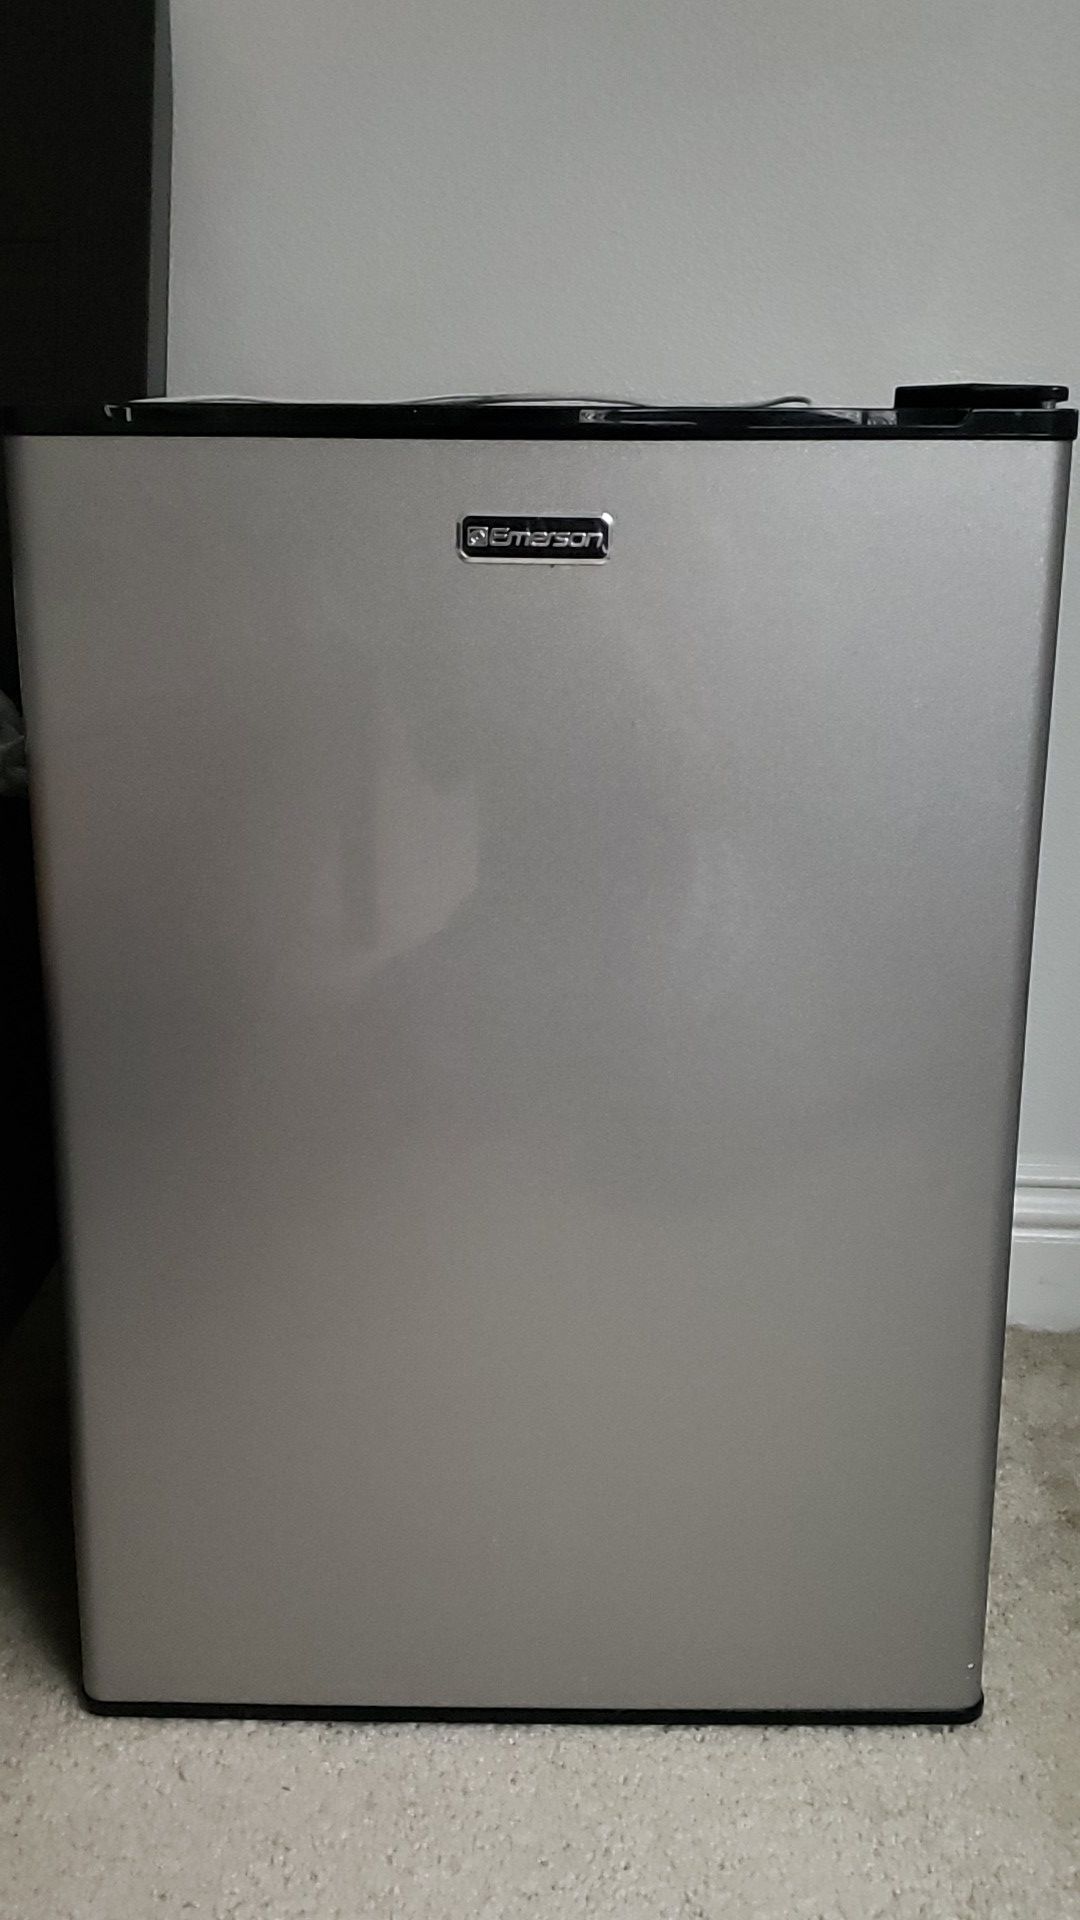 Emerson mini fridge 2.7.